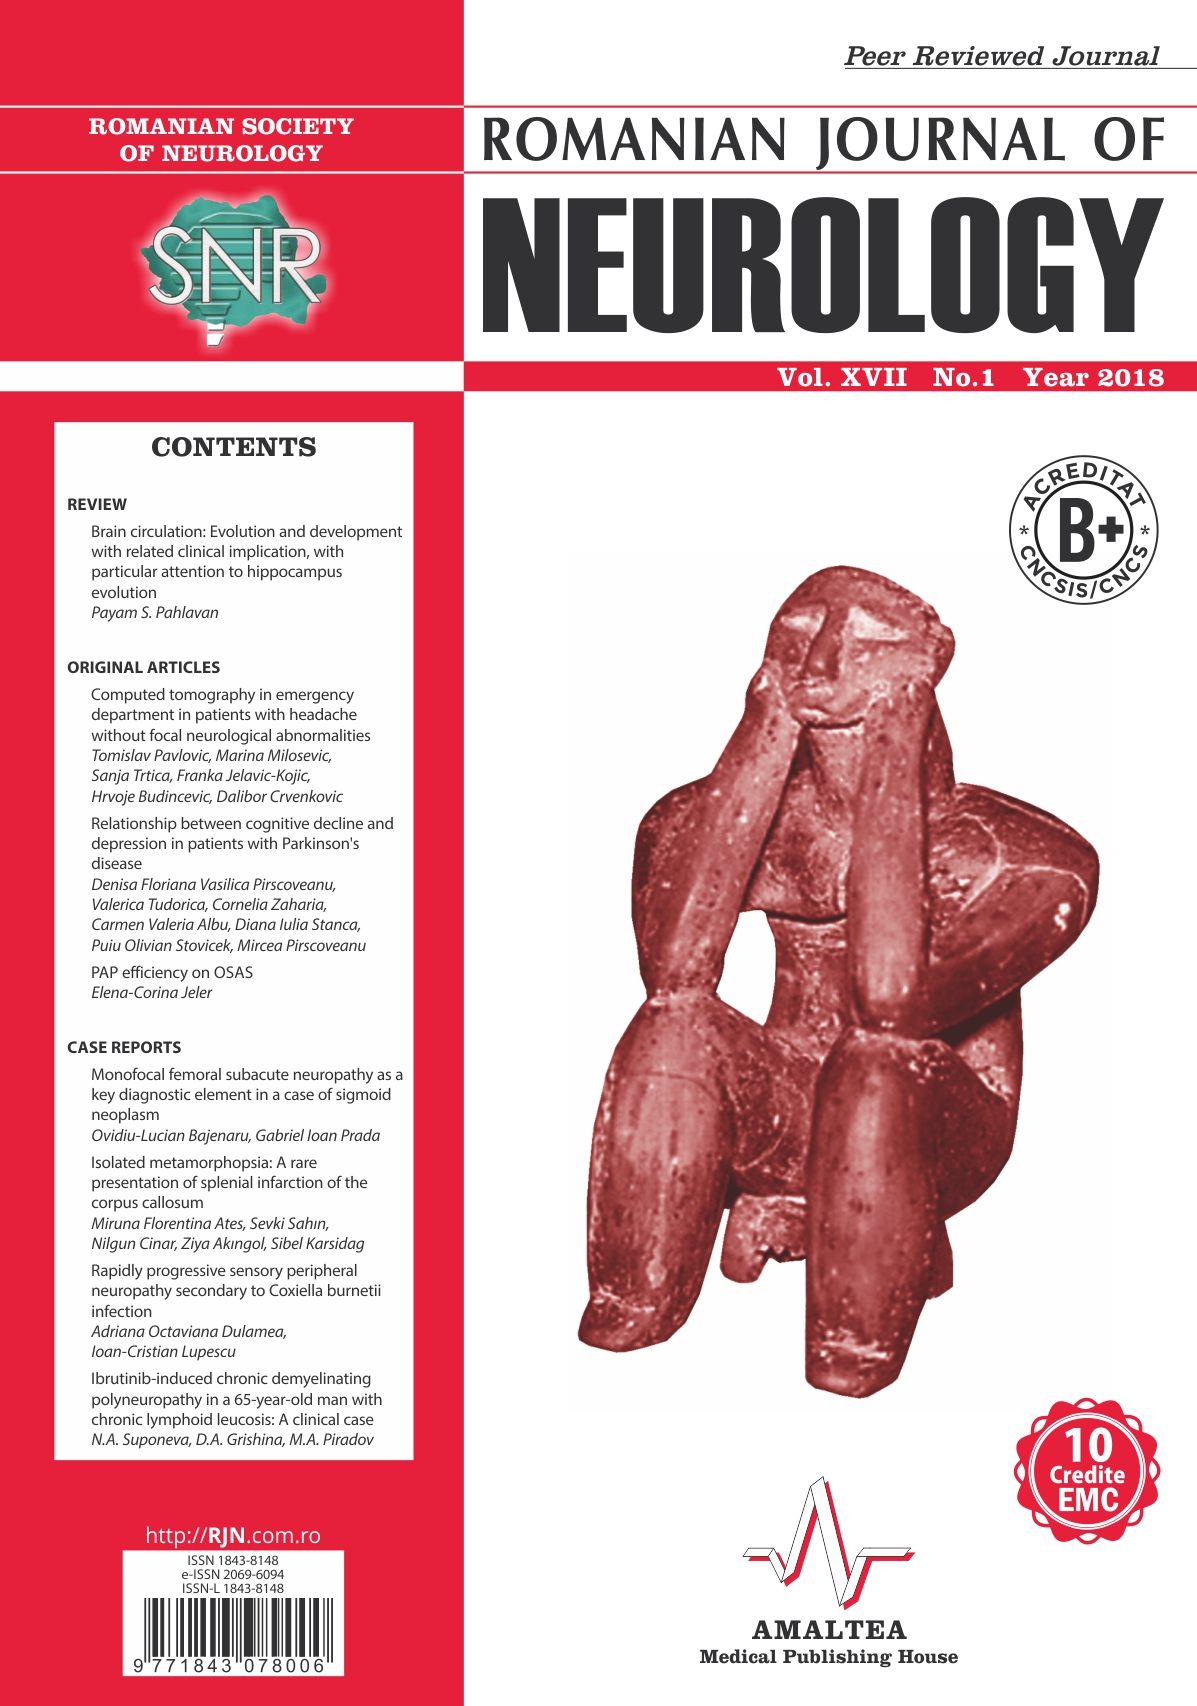 Romanian Journal of Neurology, Volume XVII, No. 1, 2018